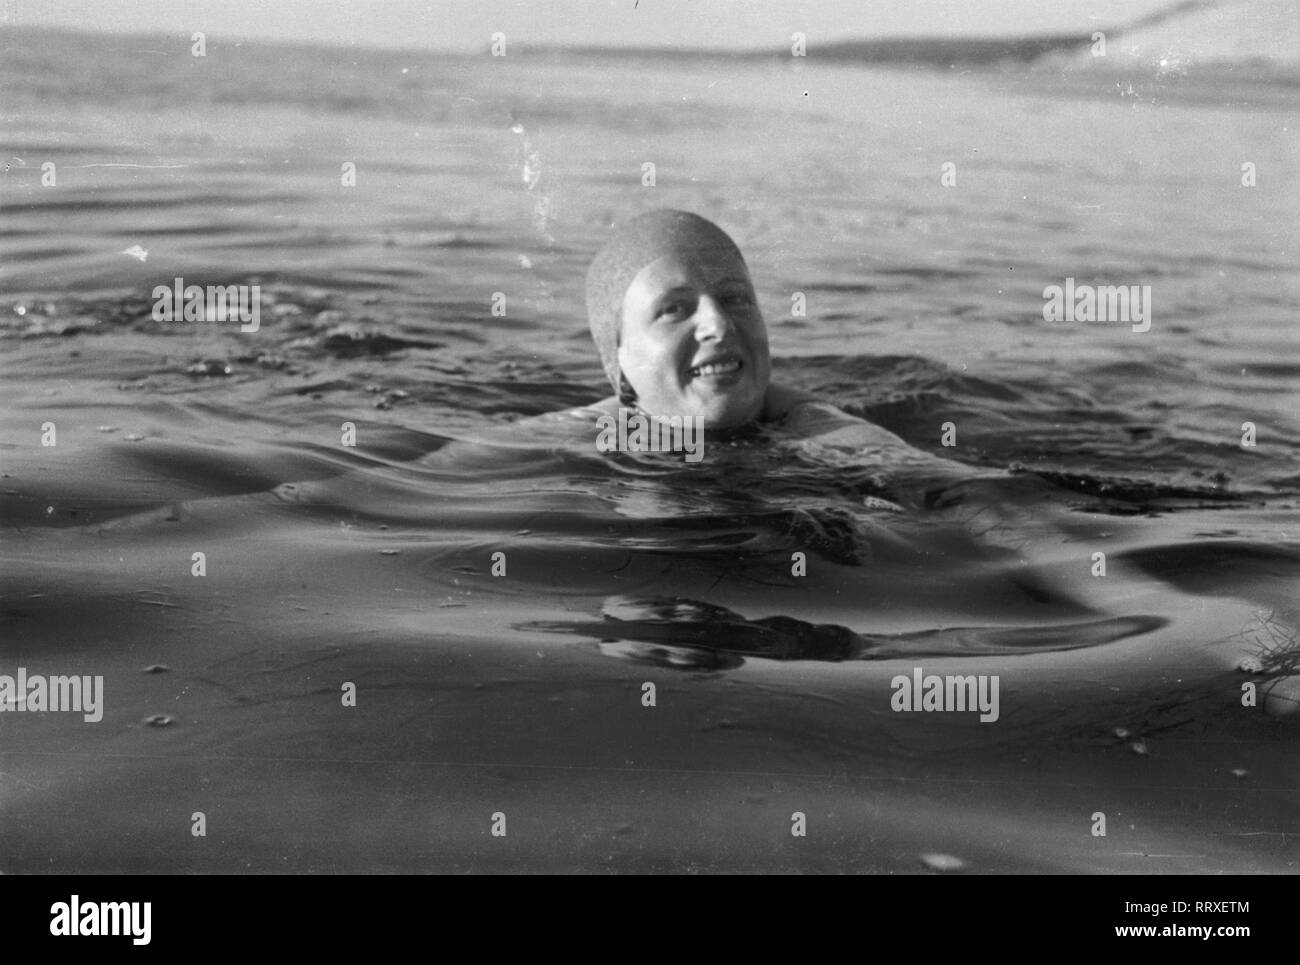 Woman - Frau, Wasser, See, Meer, Schwimmen, Badehaube, Badekappe, 1950er, 1950s Stock Photo